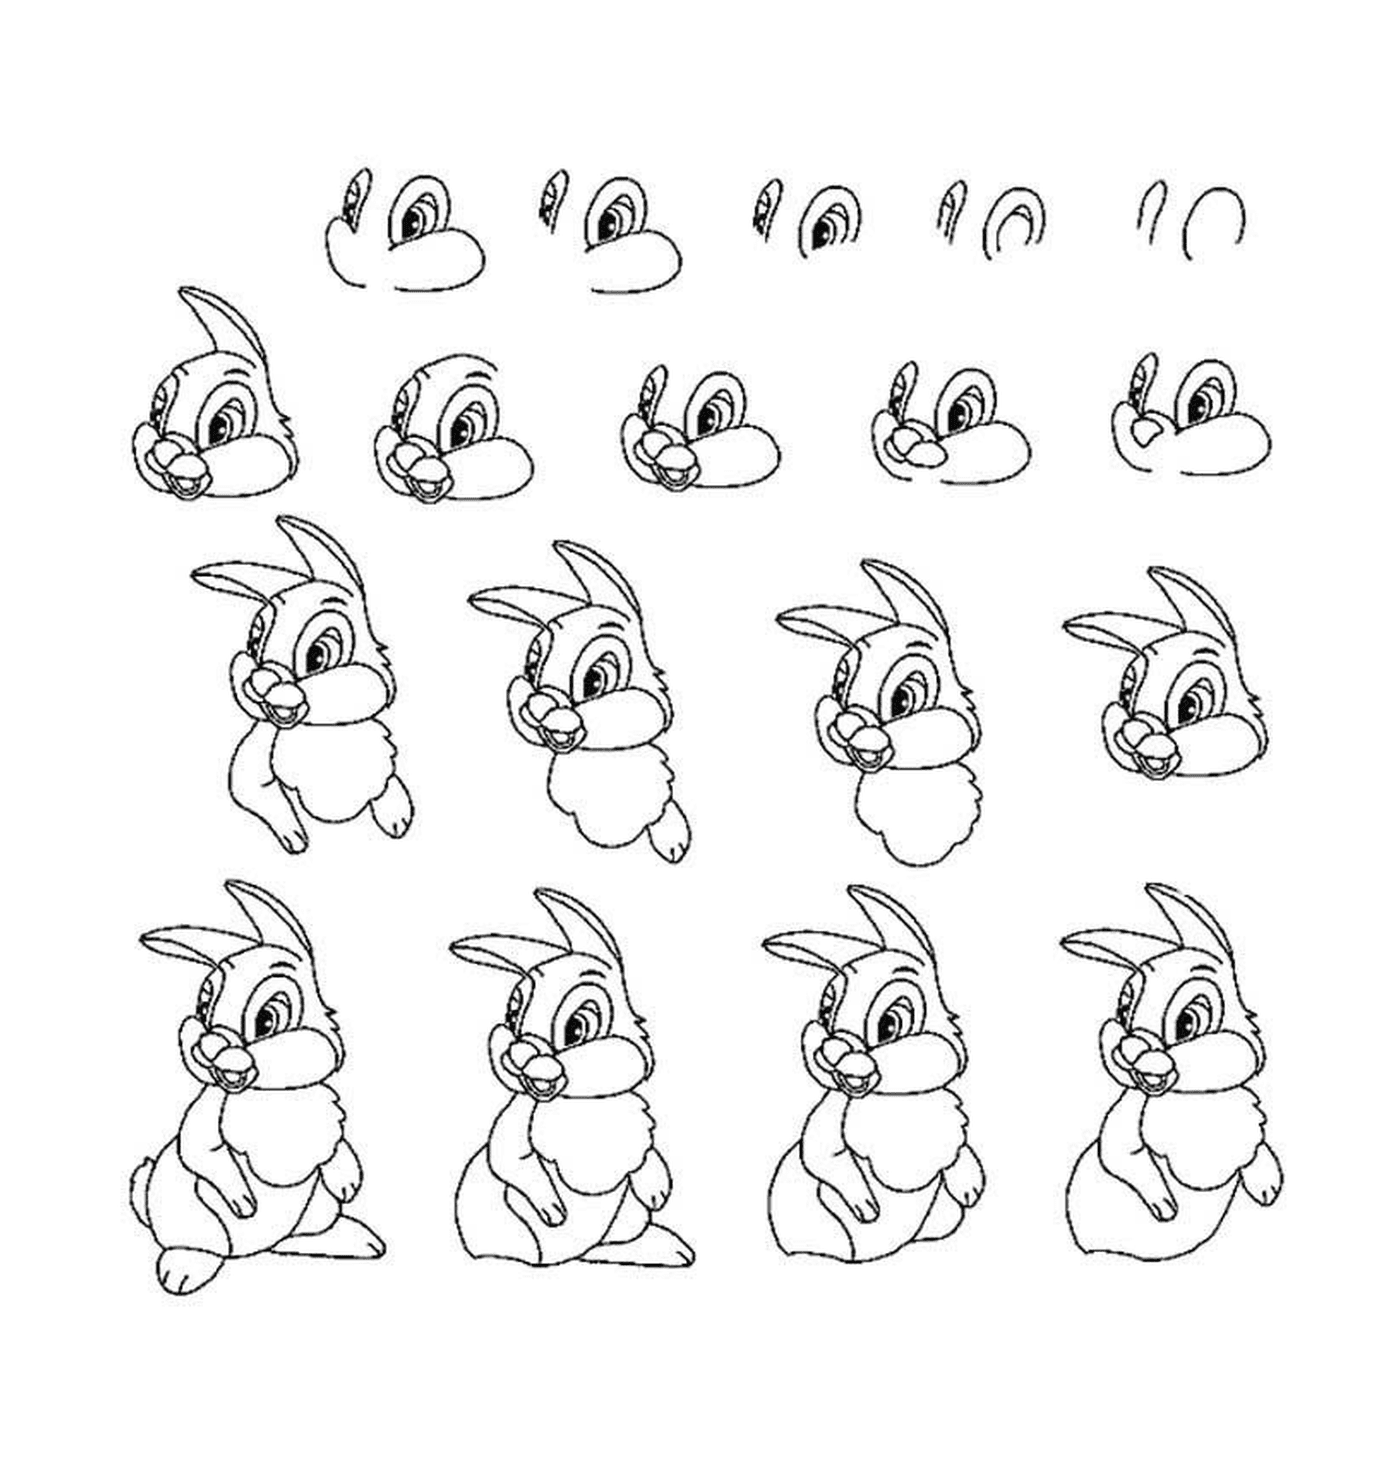  Diferentes poses de conejo 